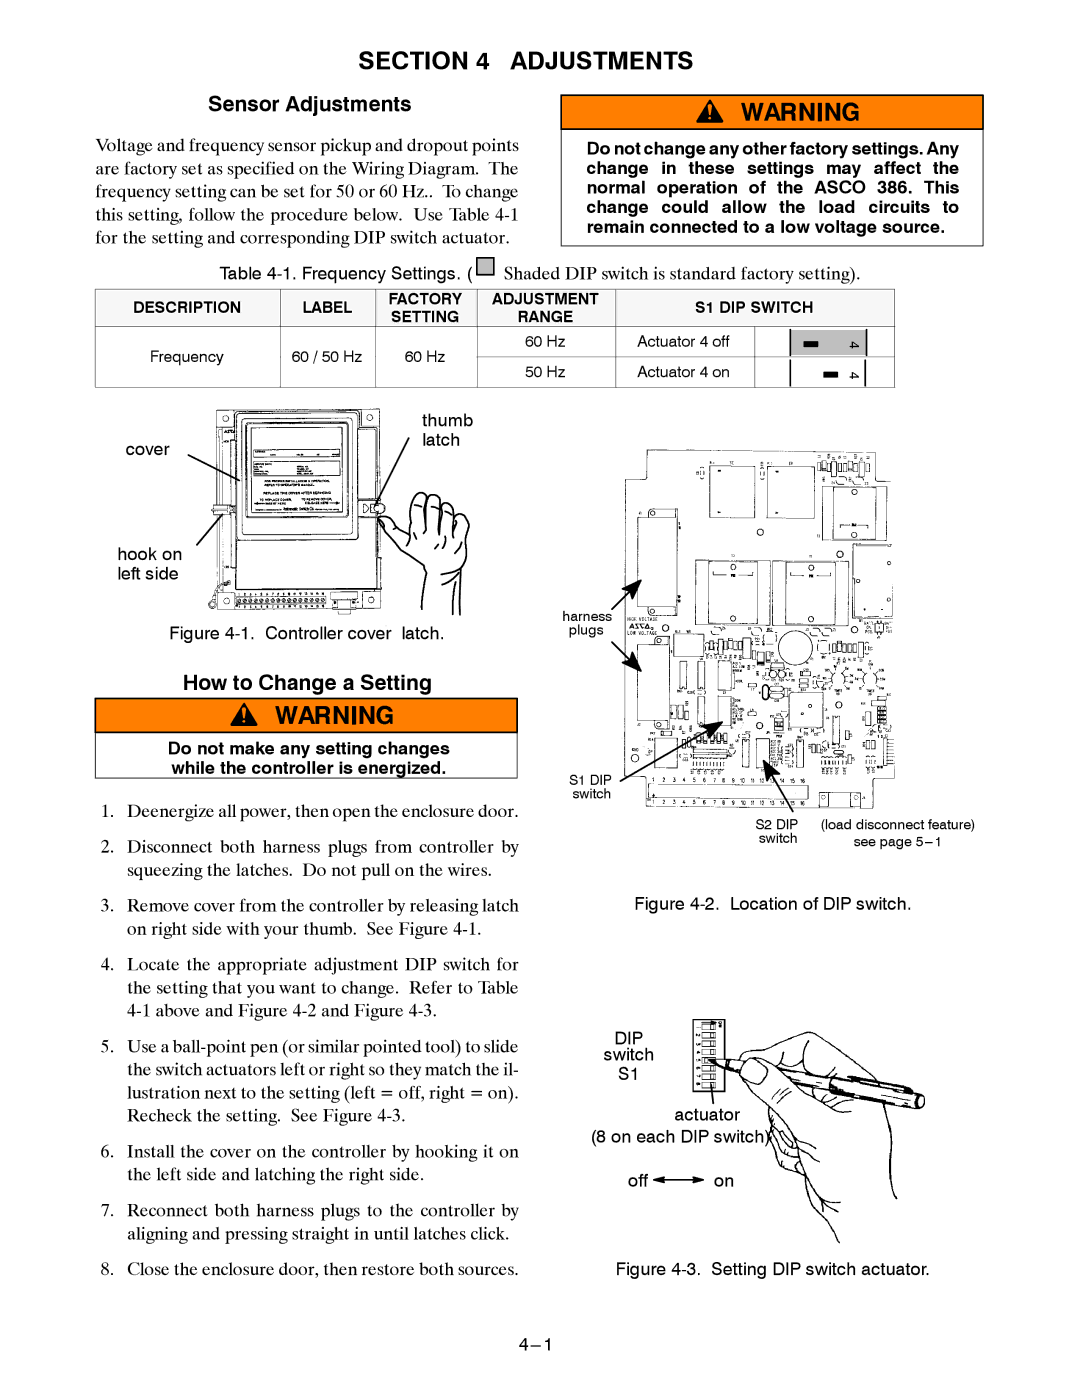 Emerson 381333230 manual Sensor Adjustments, How to Change a Setting 